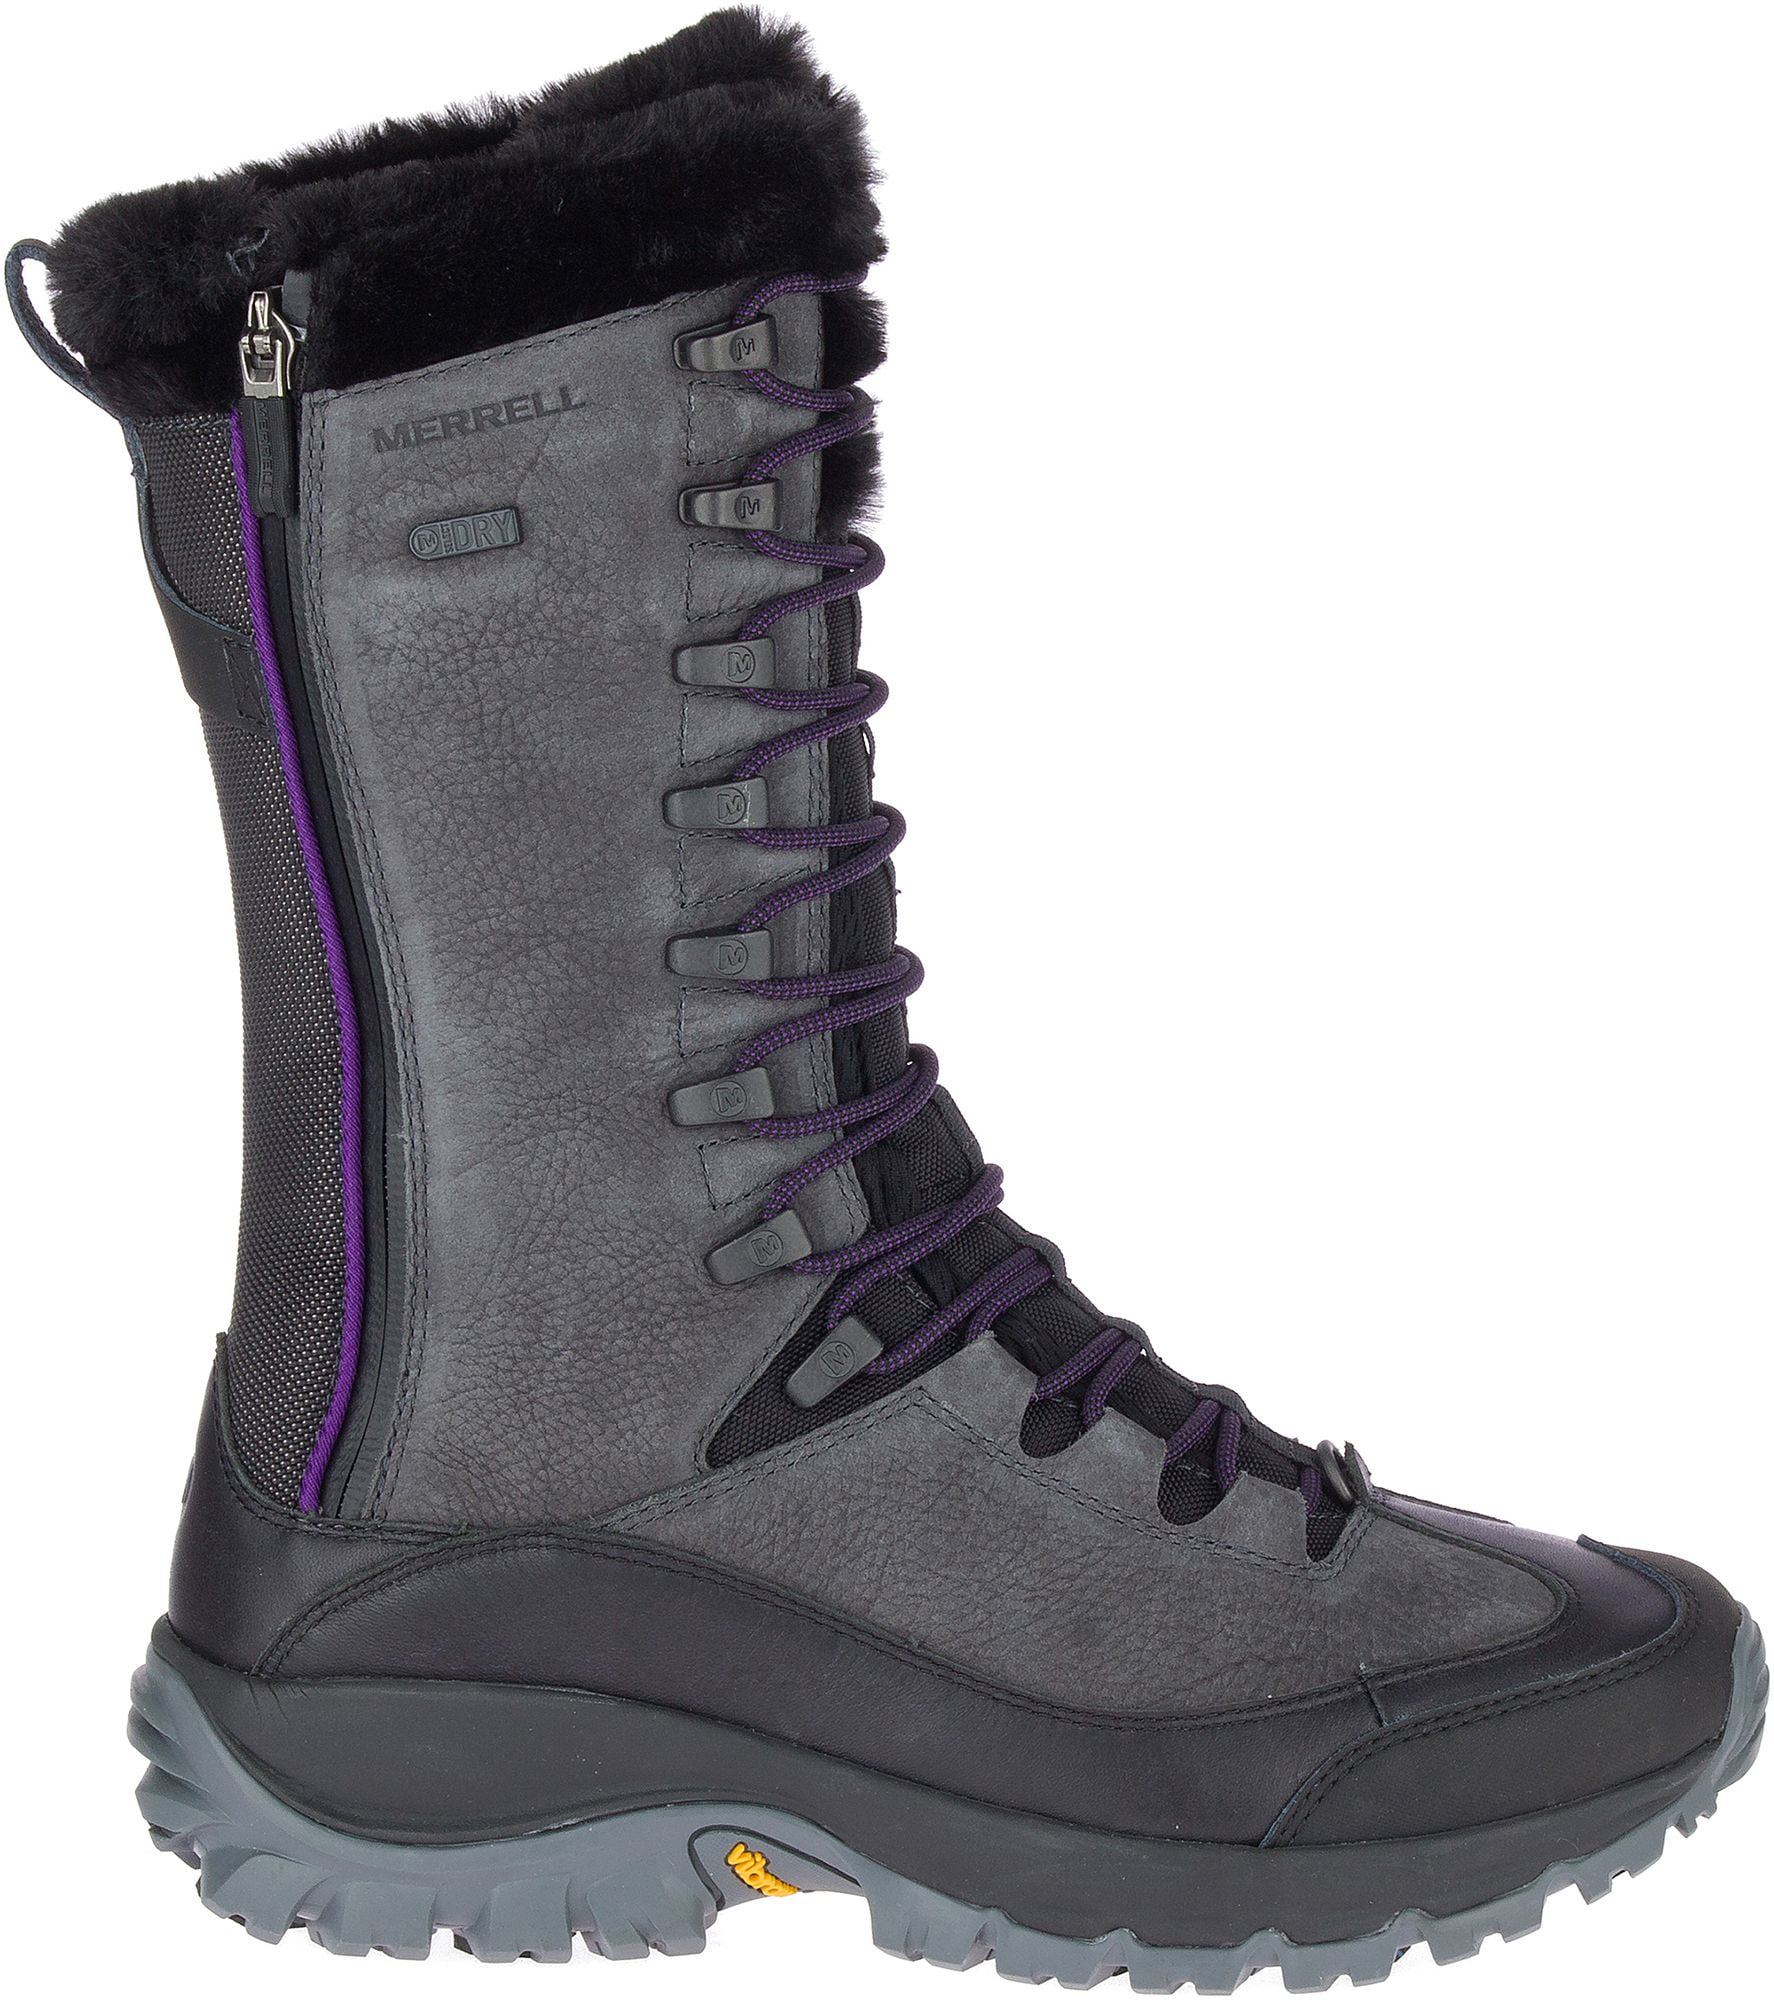 womens tall waterproof hiking boots